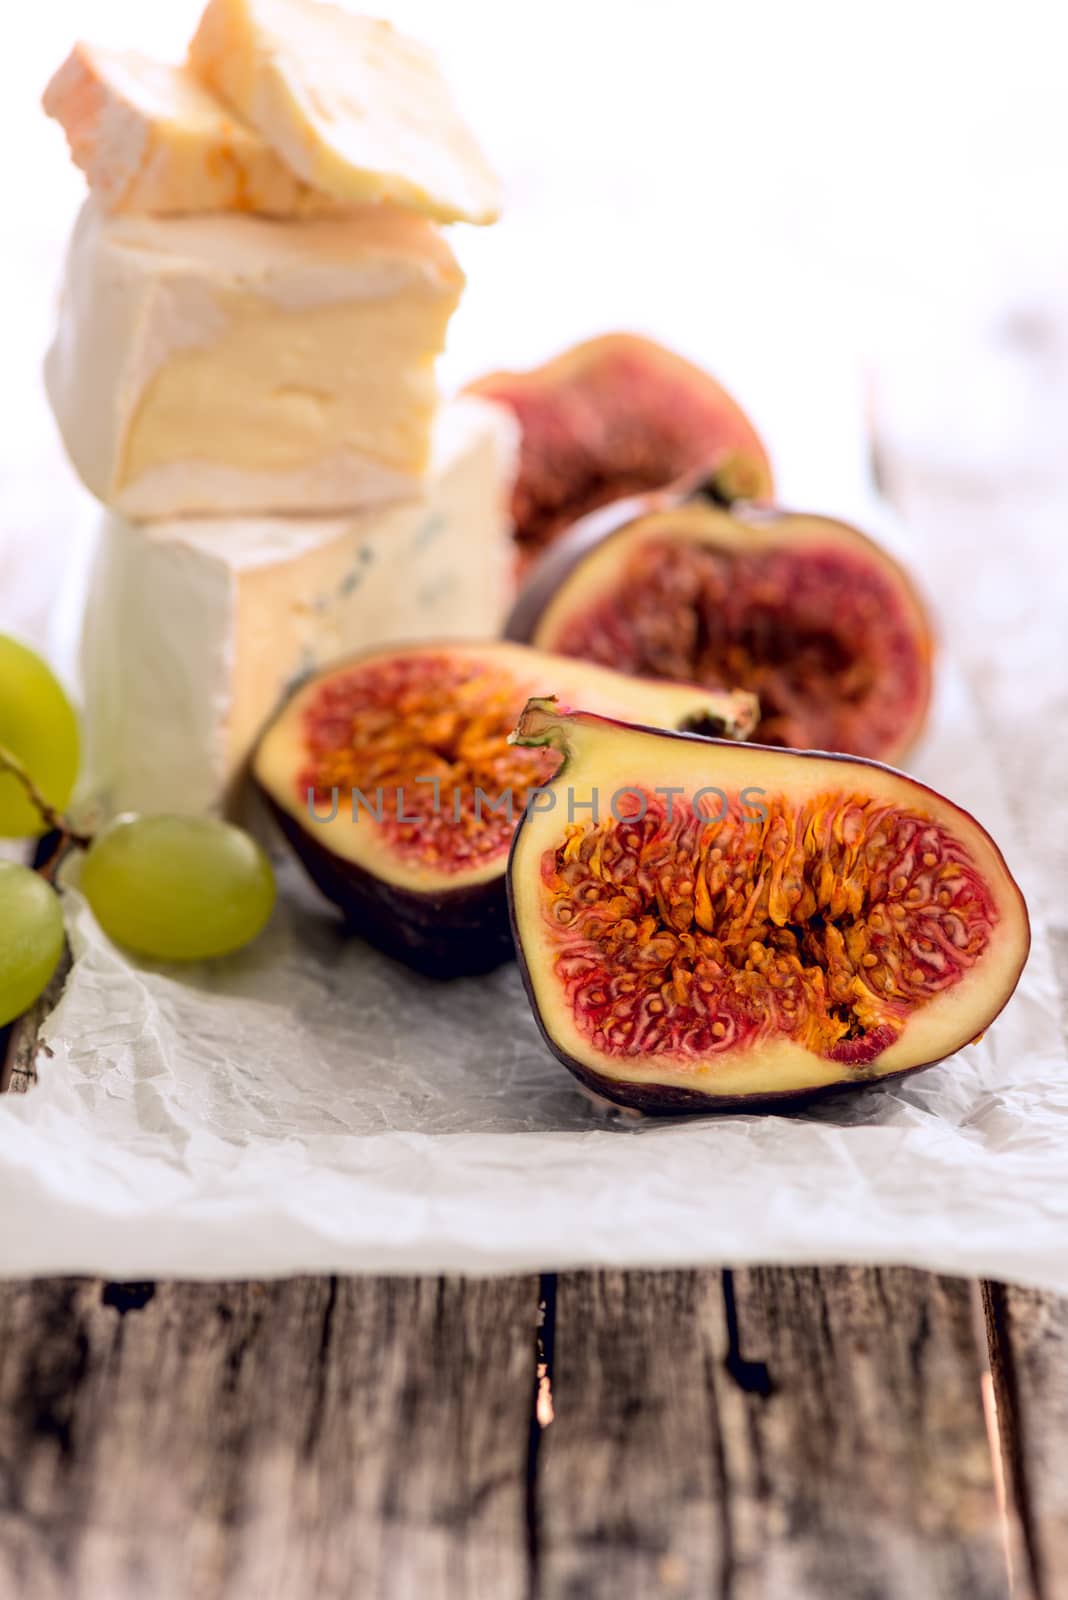 Cheese figs grapes by Nanisimova